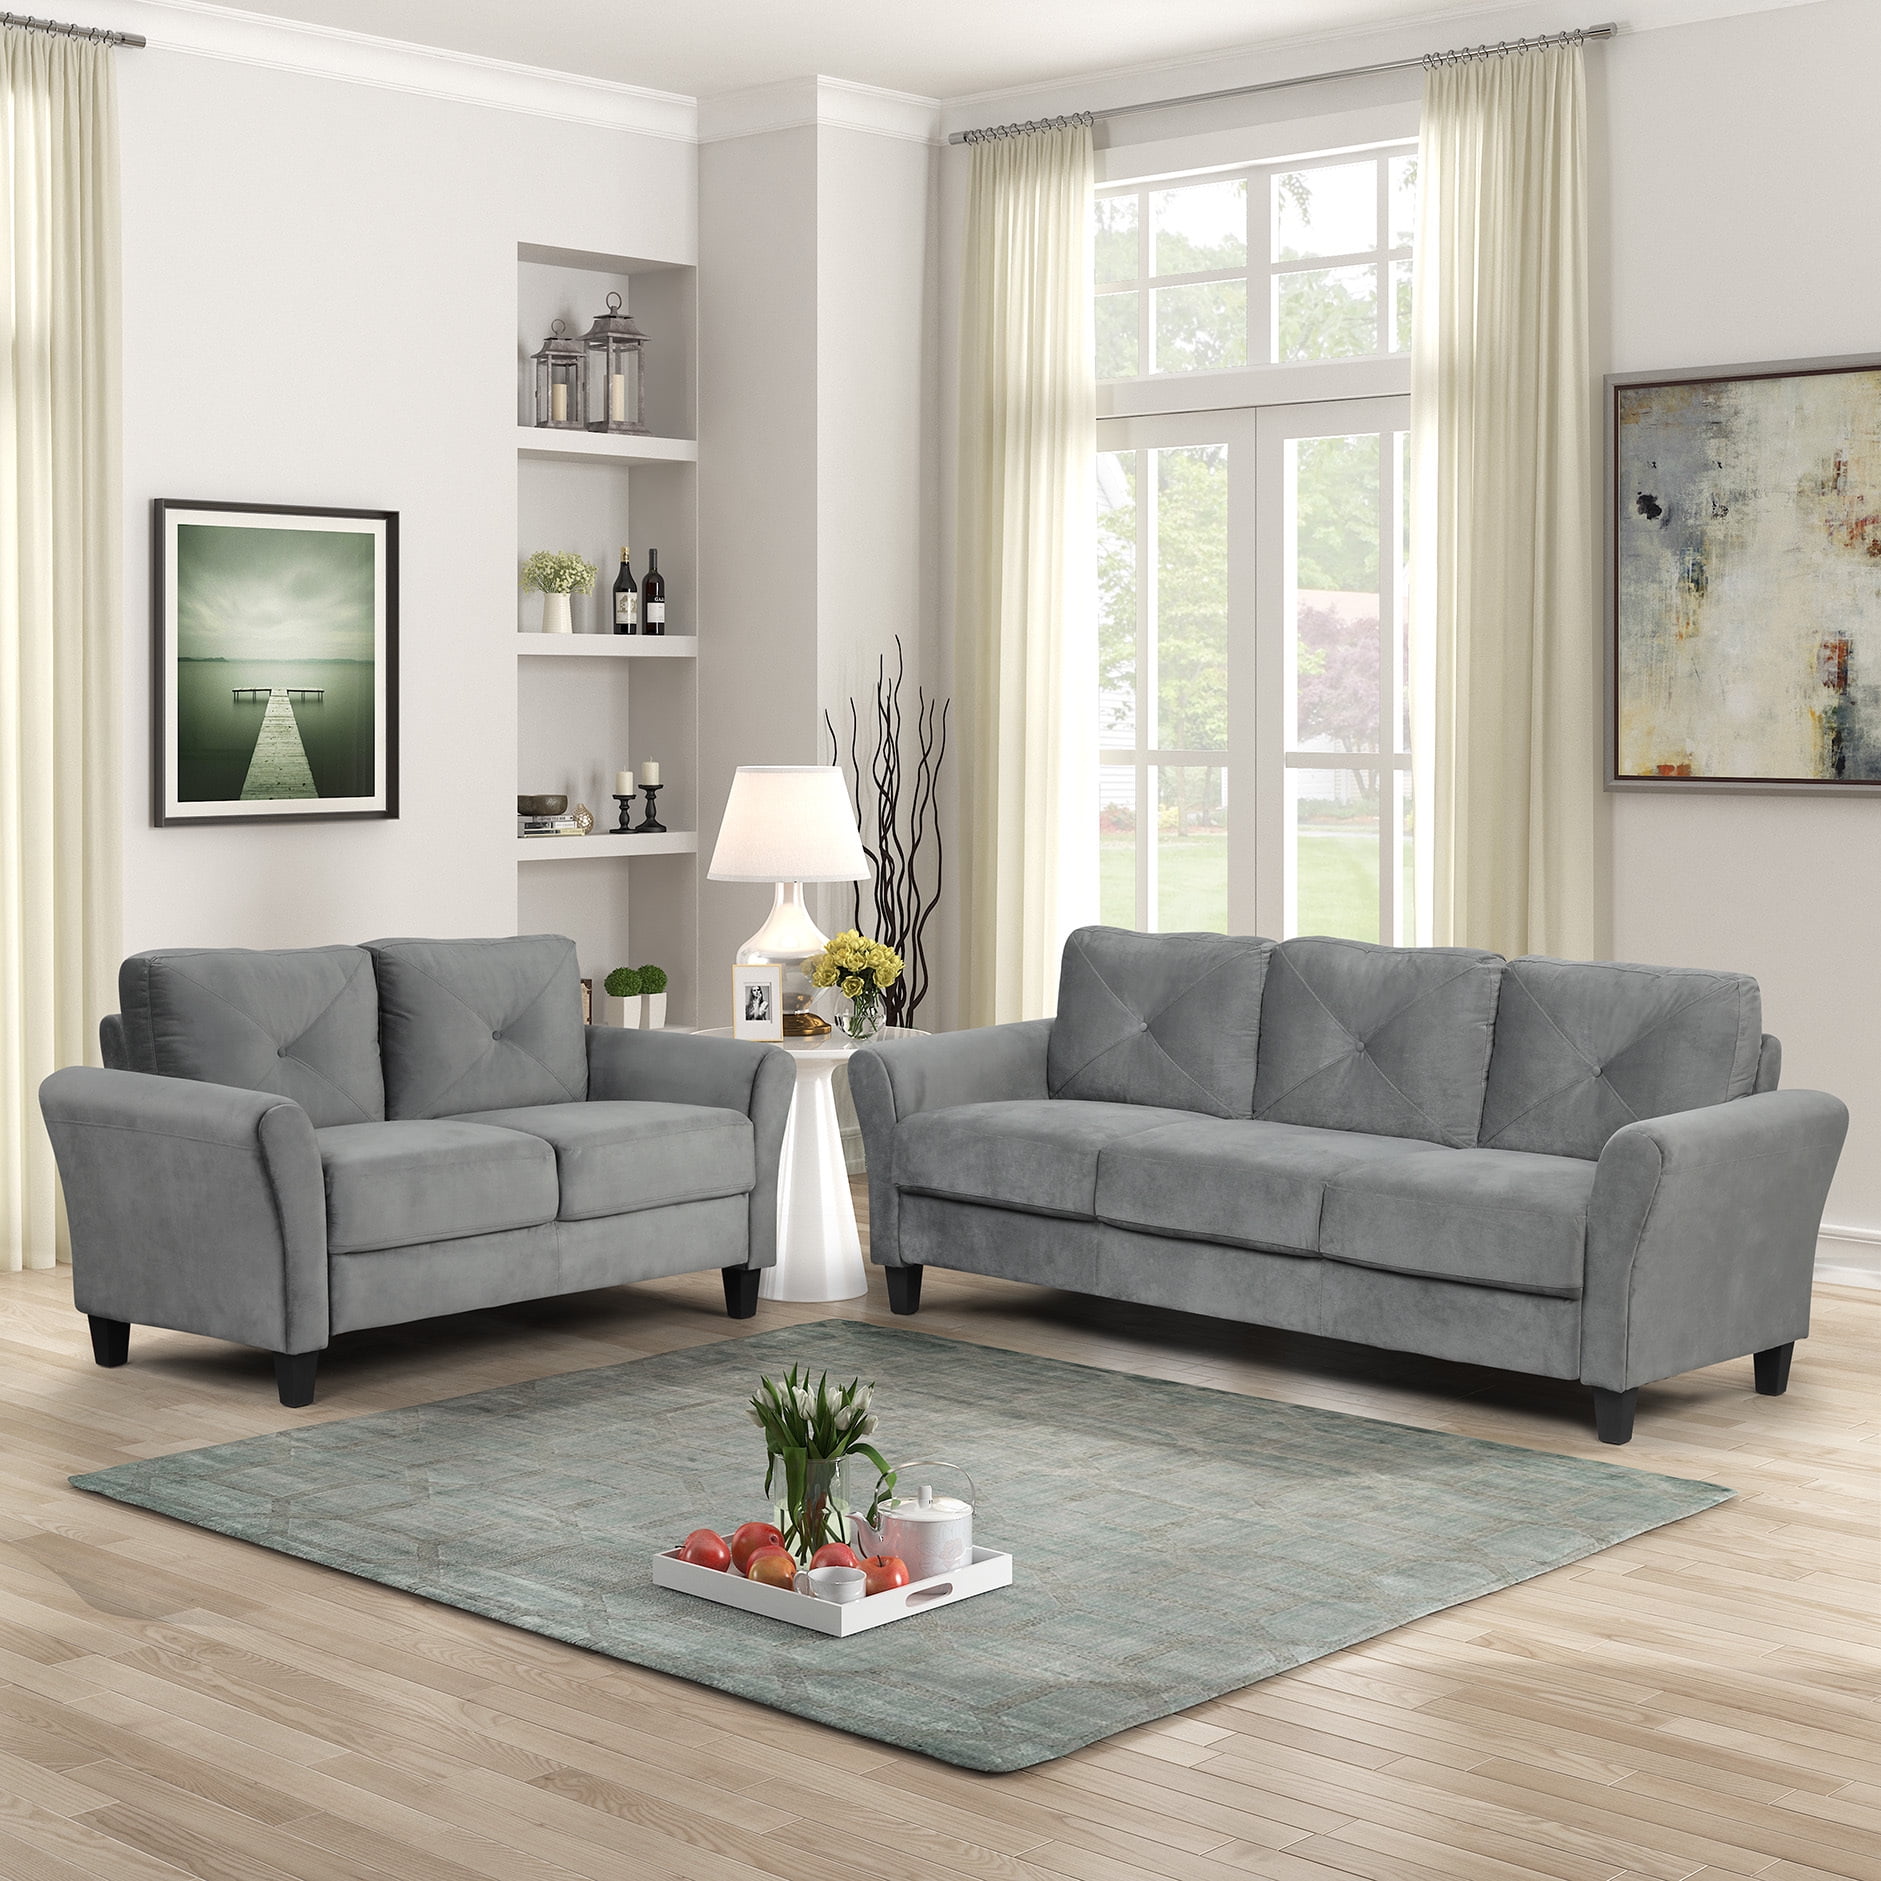 2 Piece Sectional Sofa Set Living Room Furniture Egypt U